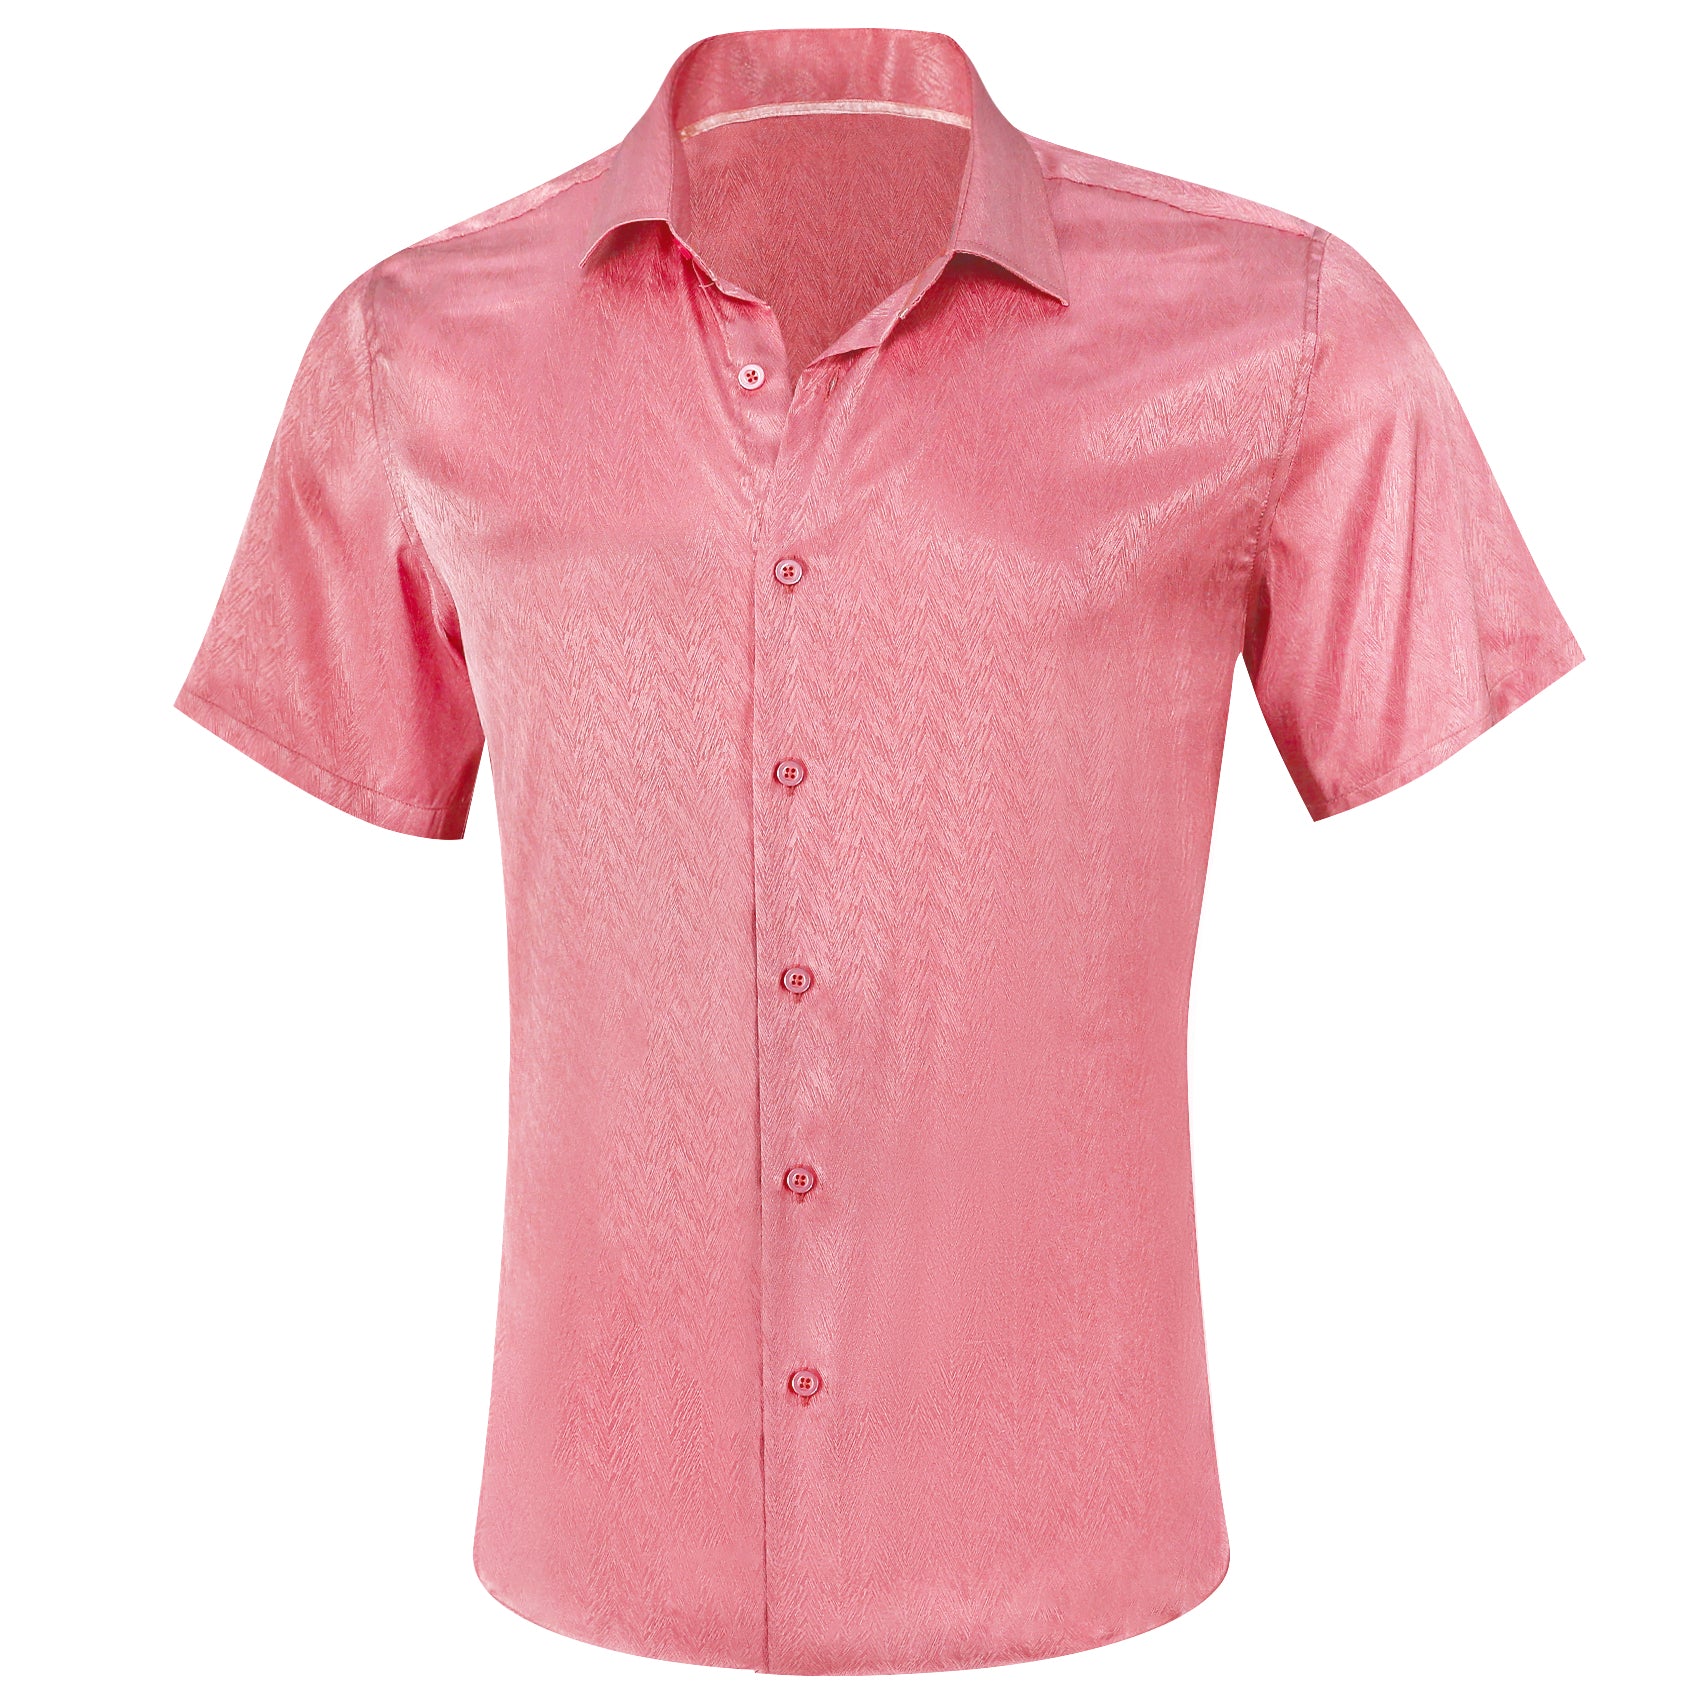 Barry.wang Light Coral  Solid Short Sleeves Silk Shirt